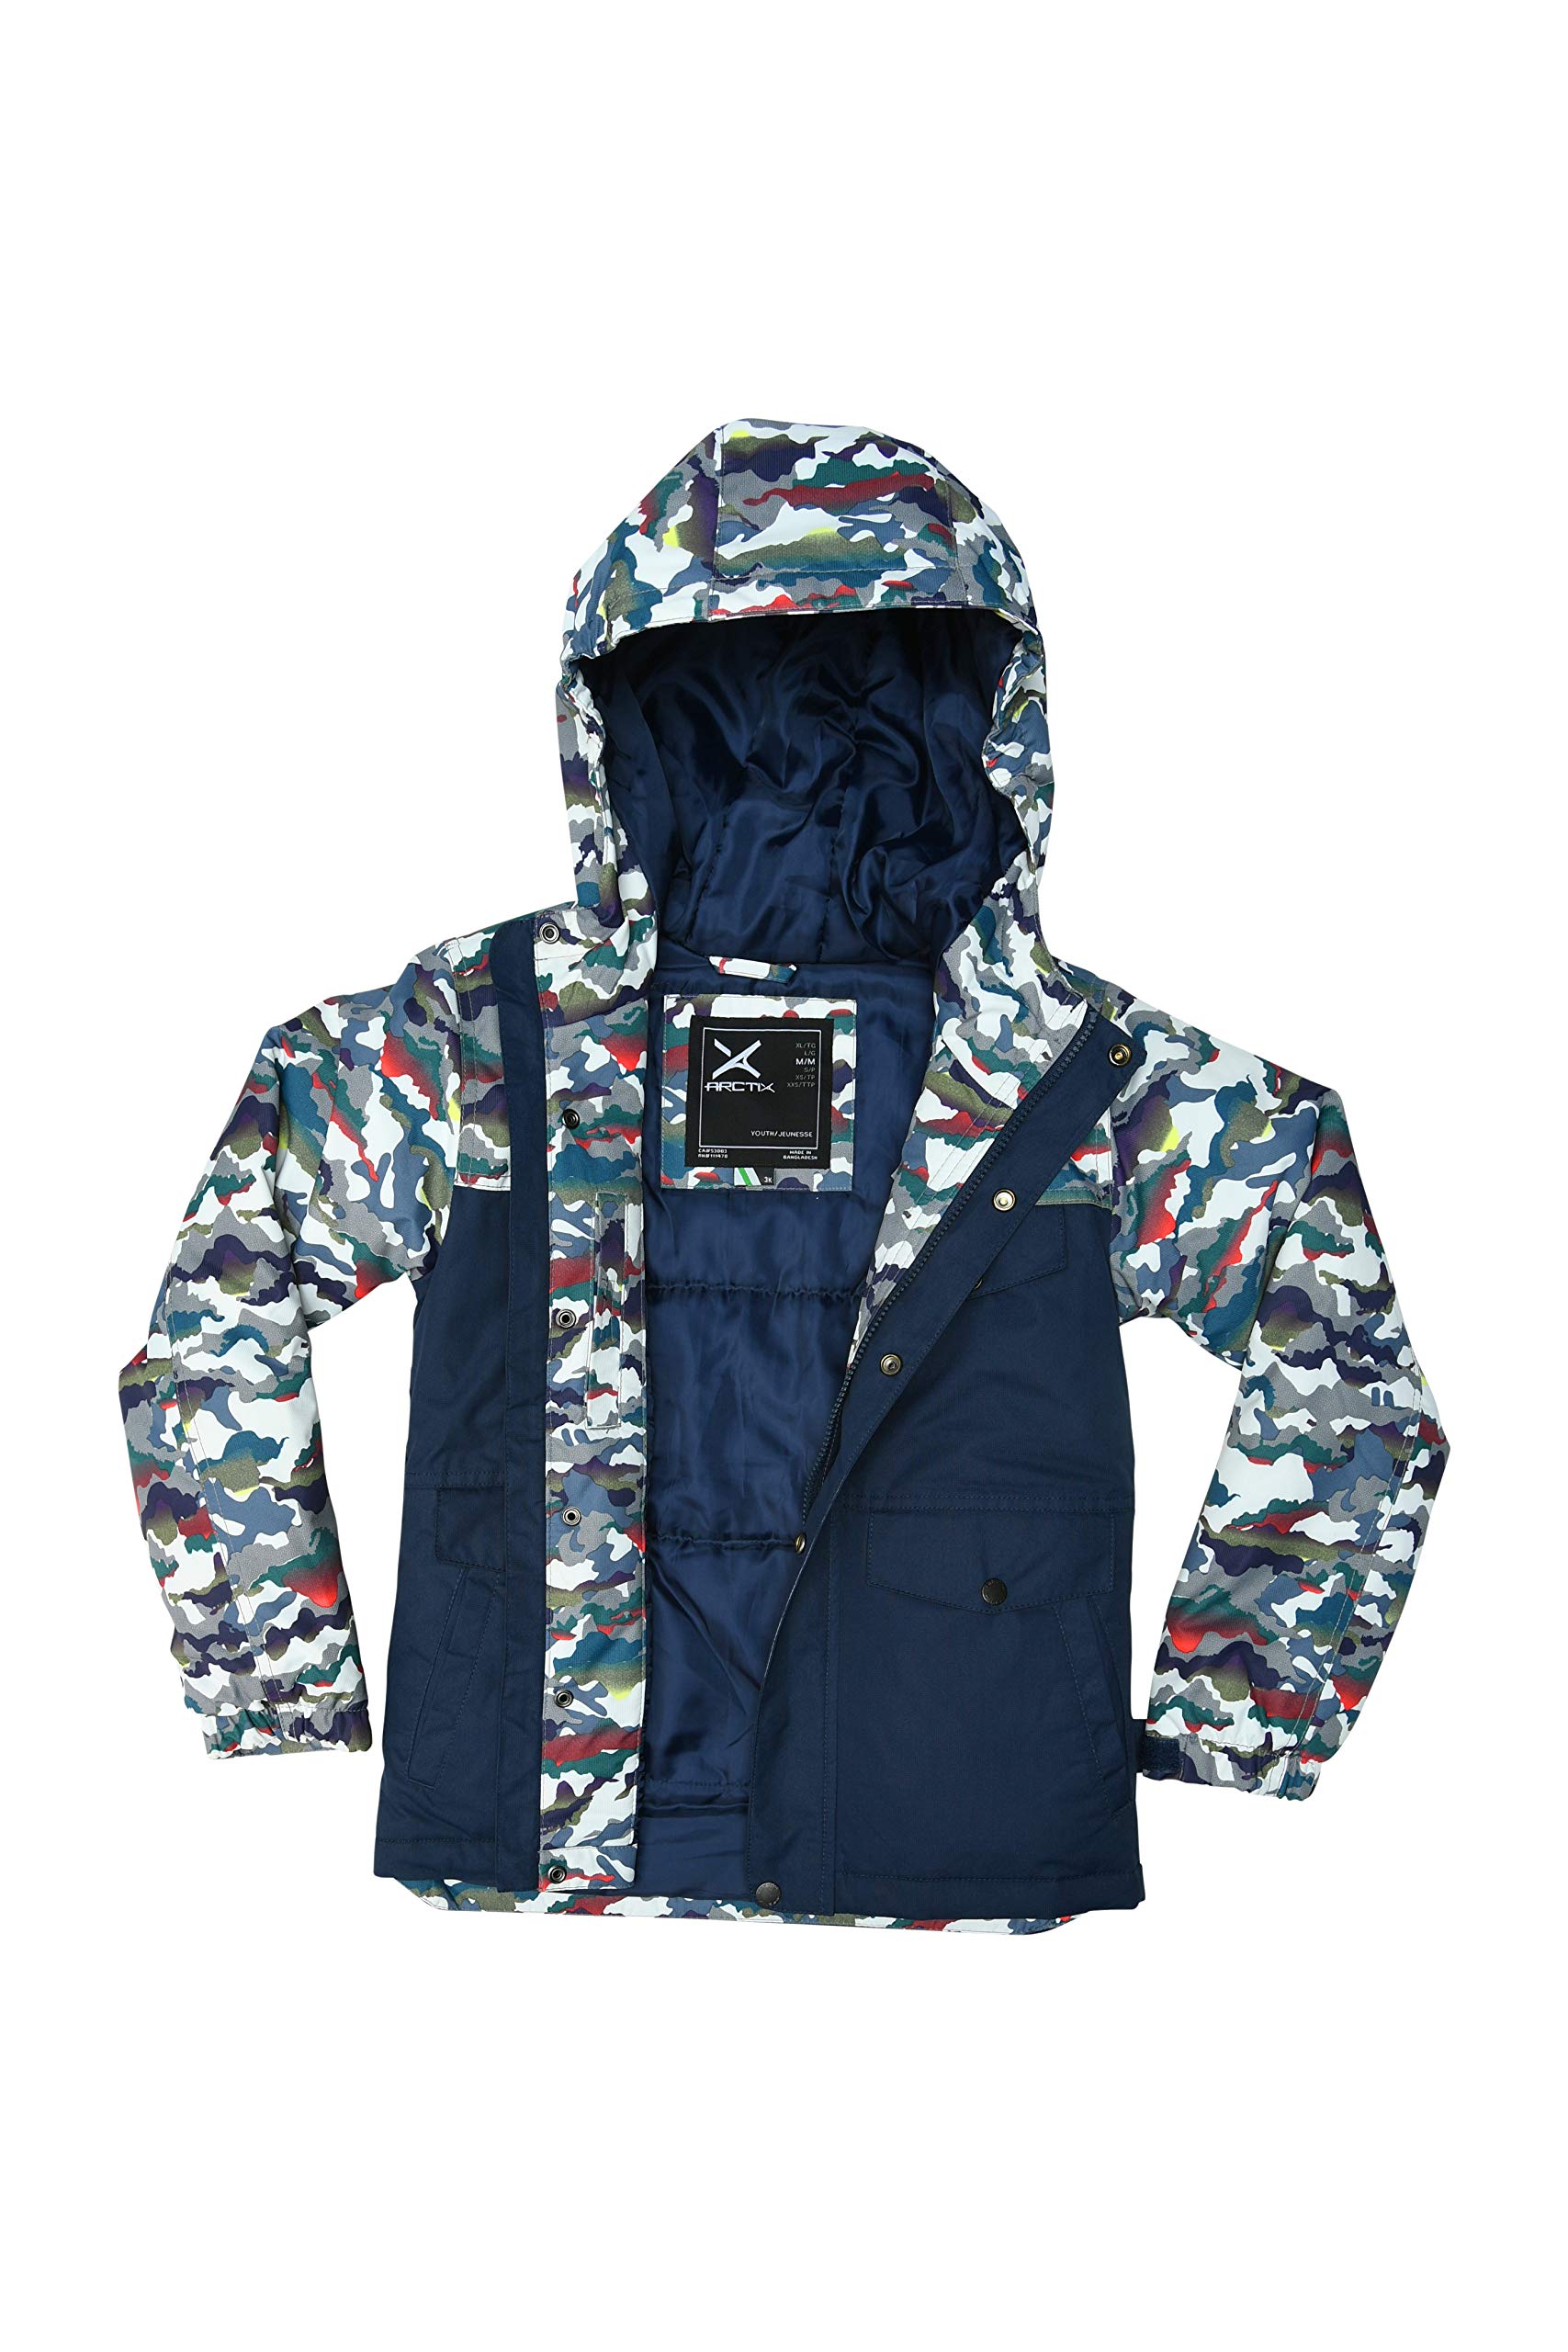 Arctix Kids Slalom Insulated Winter Jacket